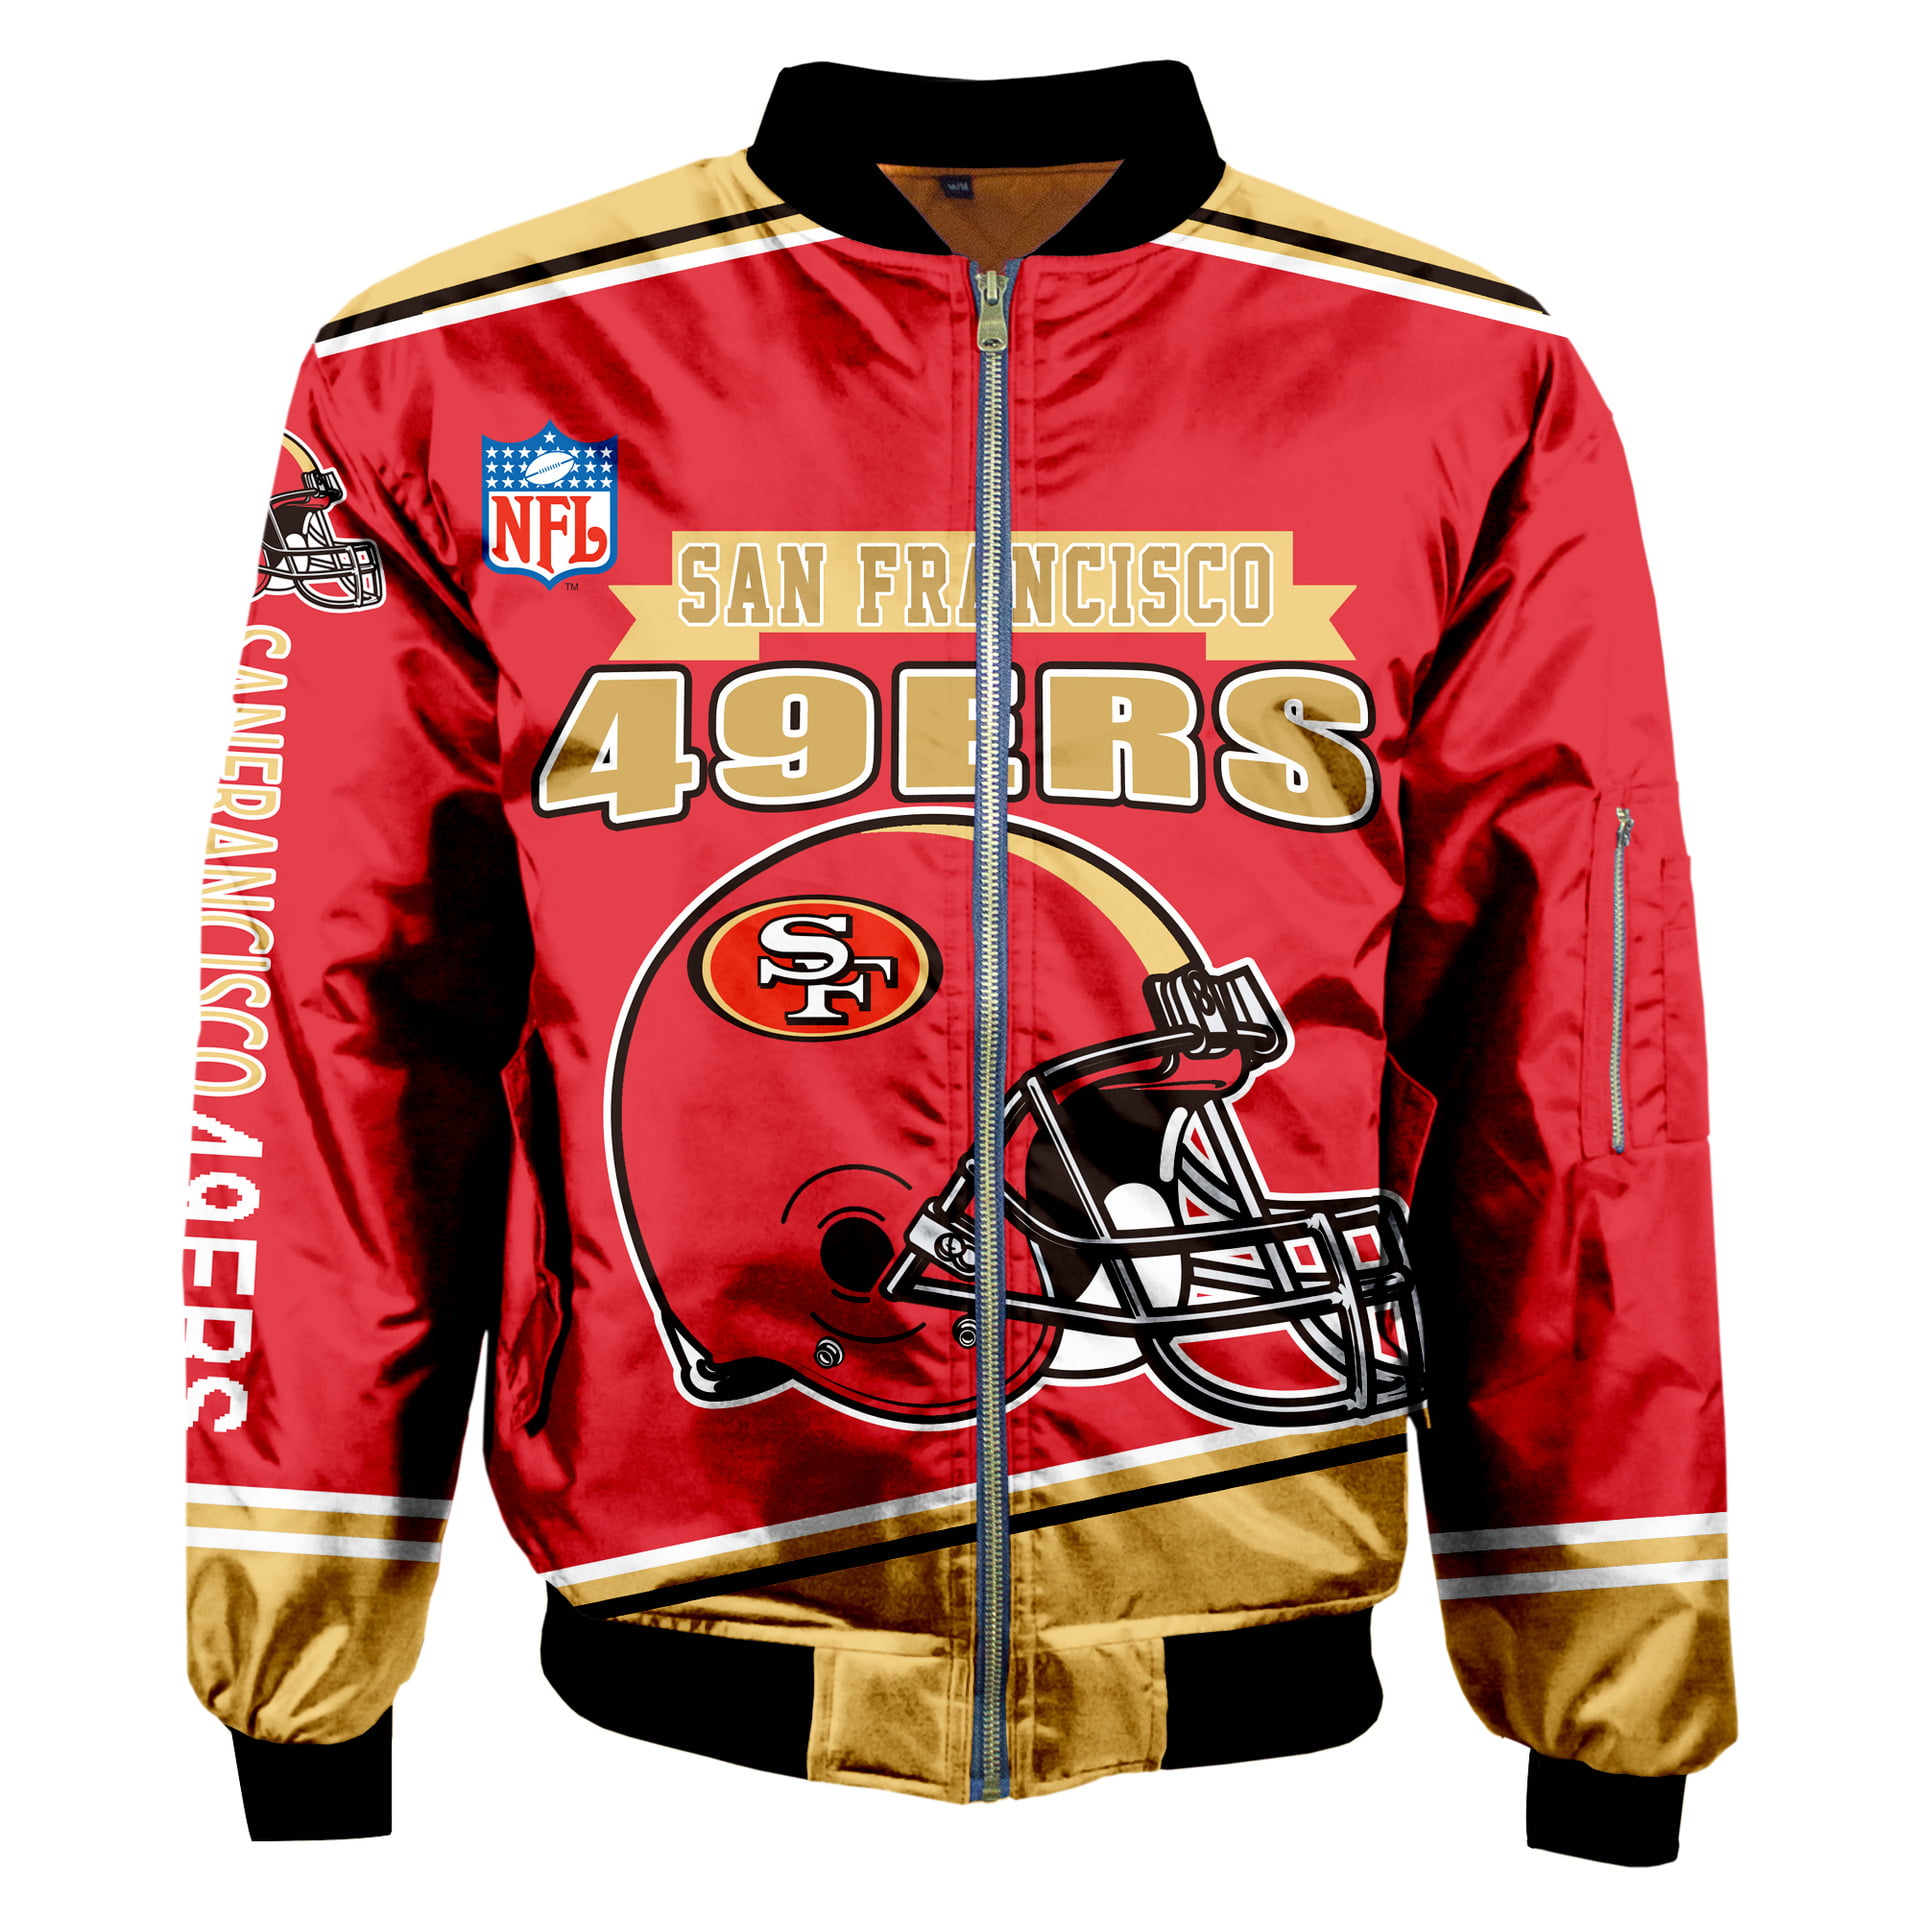 JJZXX Football Jacket Super Bowl Champions Mens Outdoor Sports Lightweight Jackets Coat S-5xl - San Francisco - 49ers, Men's, Size: Small, Red